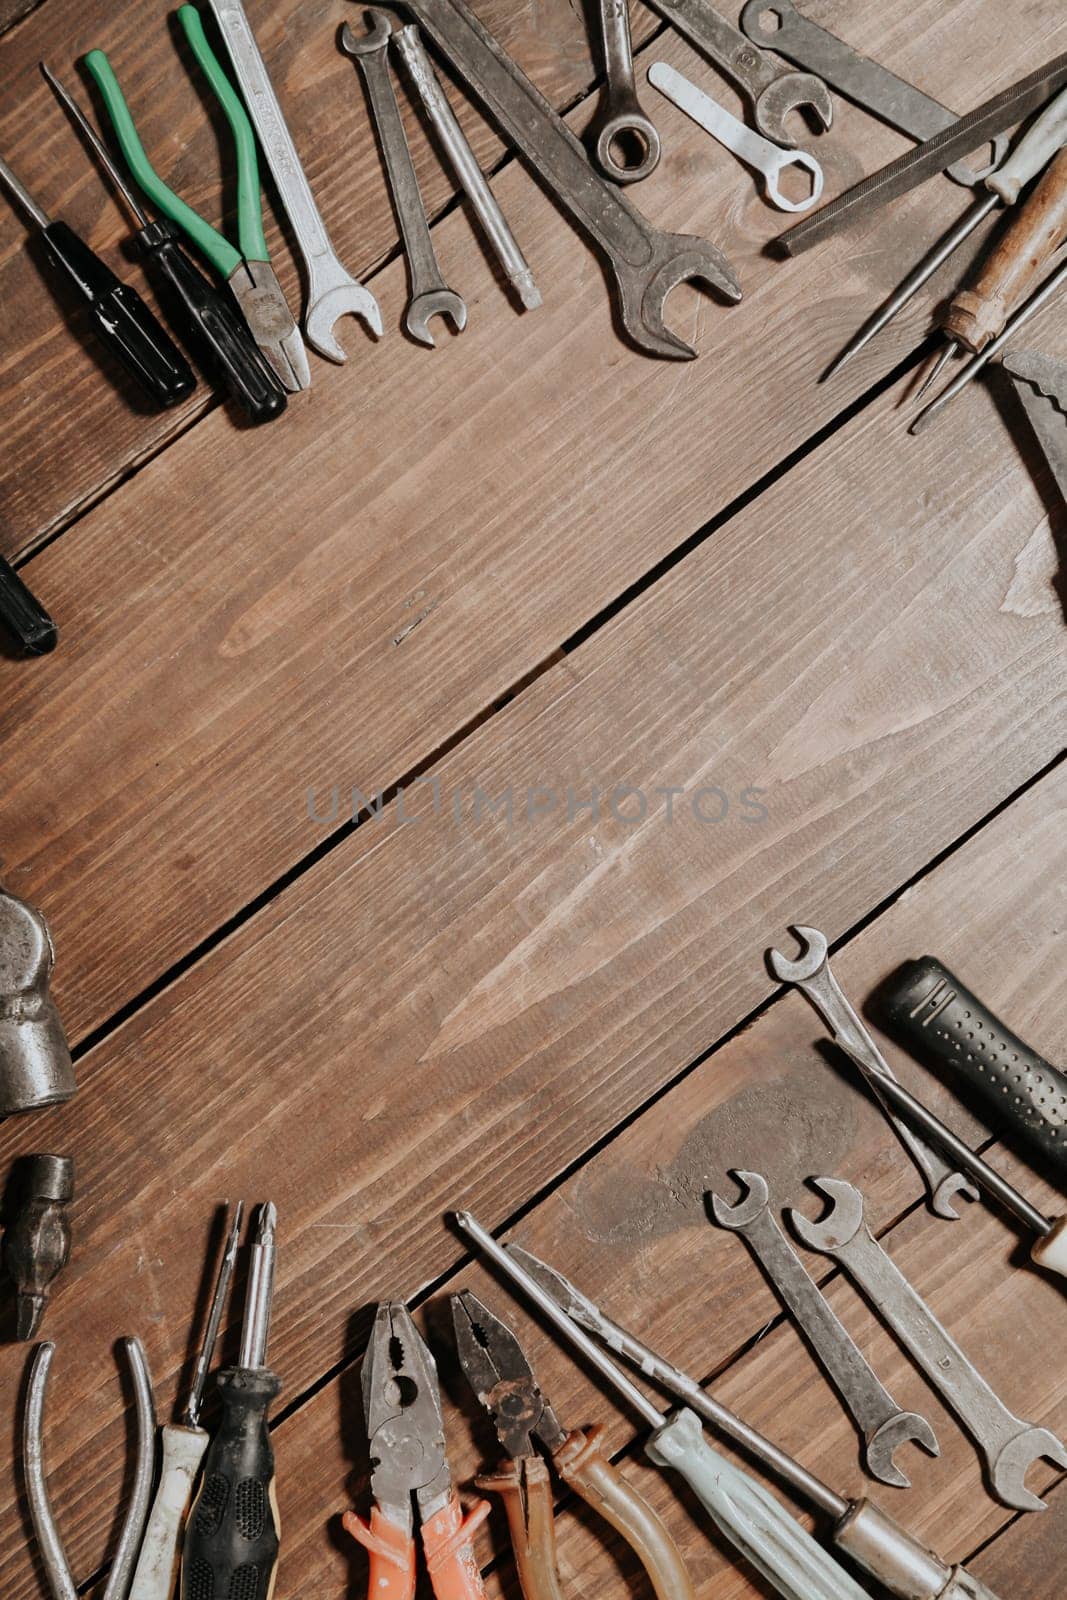 tools for repair knives hammers keys pliers by Simakov